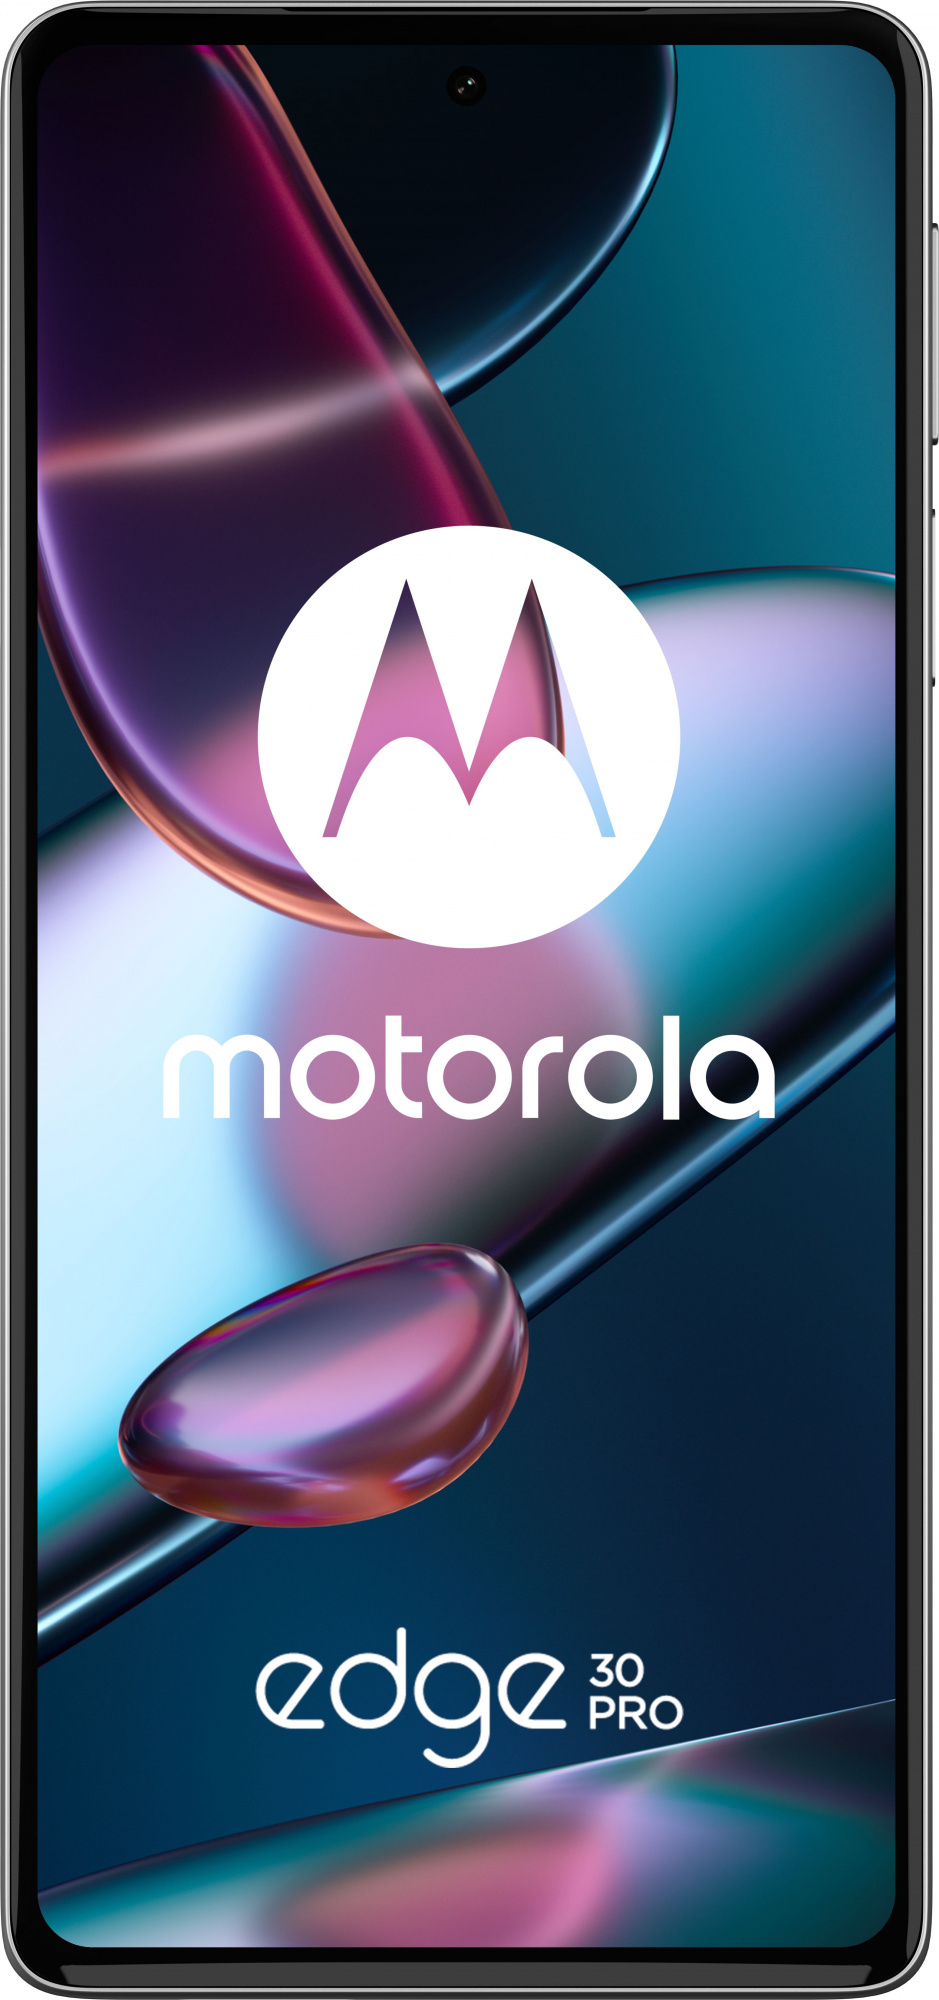 Смартфон Motorola XT2201-1 Edge 30 pro 256Gb белый (PASS0030RU)